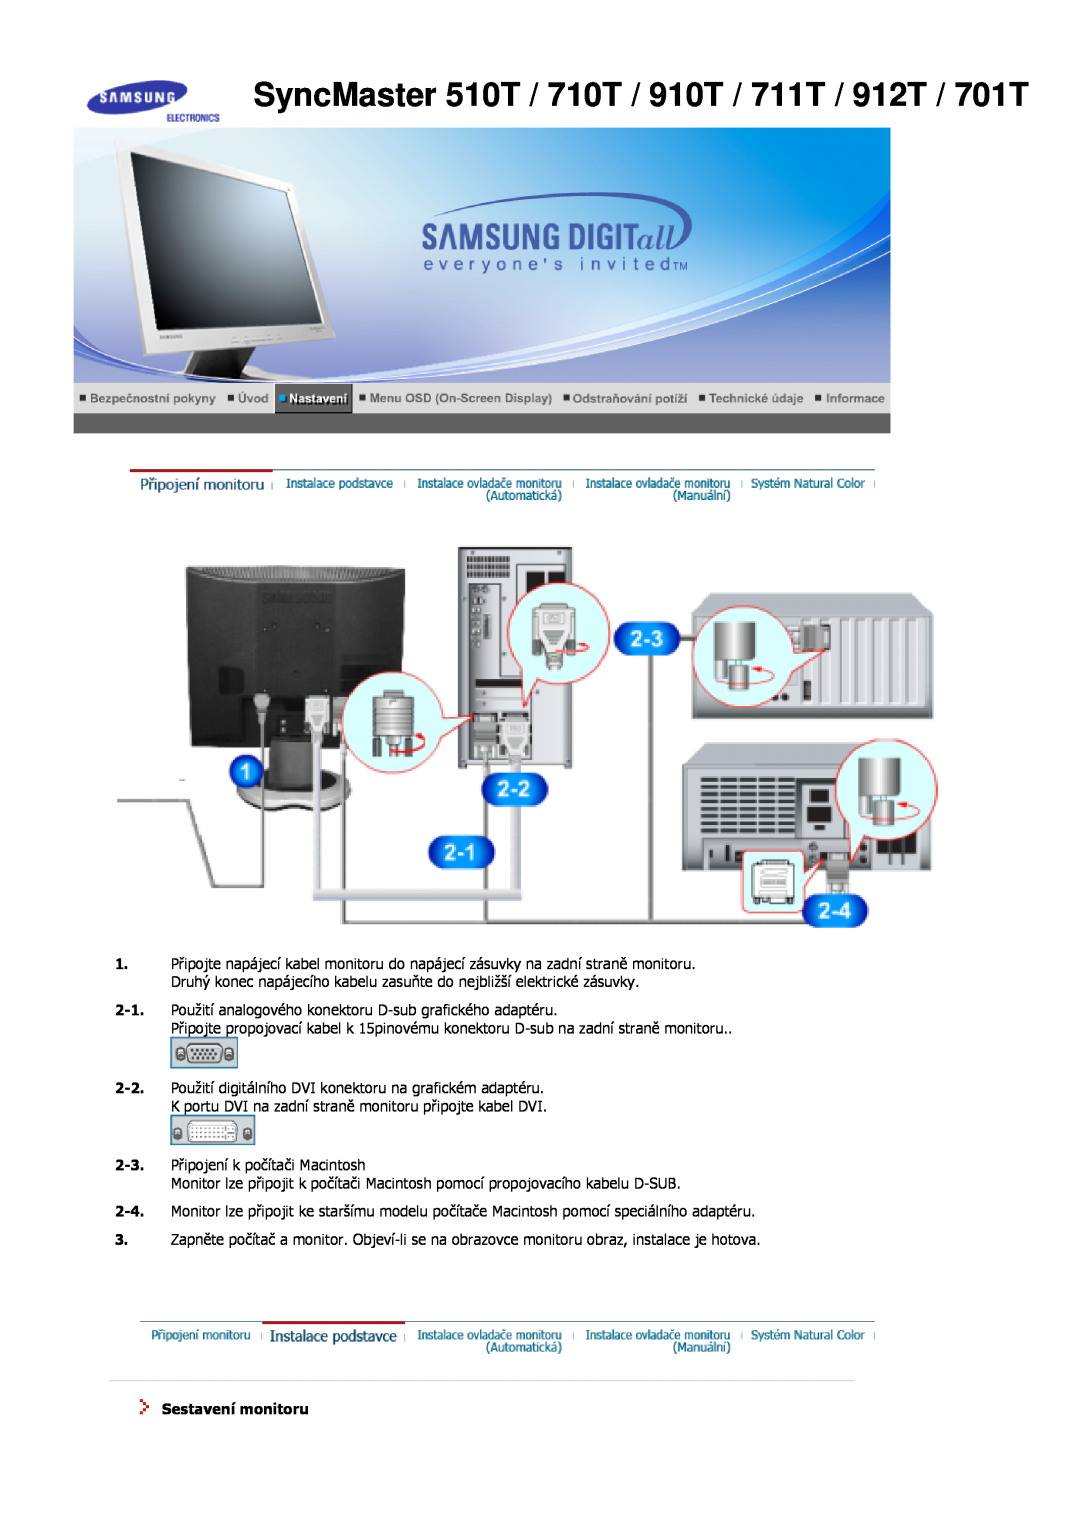 Samsung MJ17ASAS/EDC, MJ17ASKN/EDC, MJ19BSTBV/EDC SyncMaster 510T / 710T / 910T / 711T / 912T / 701T, Sestavení monitoru 